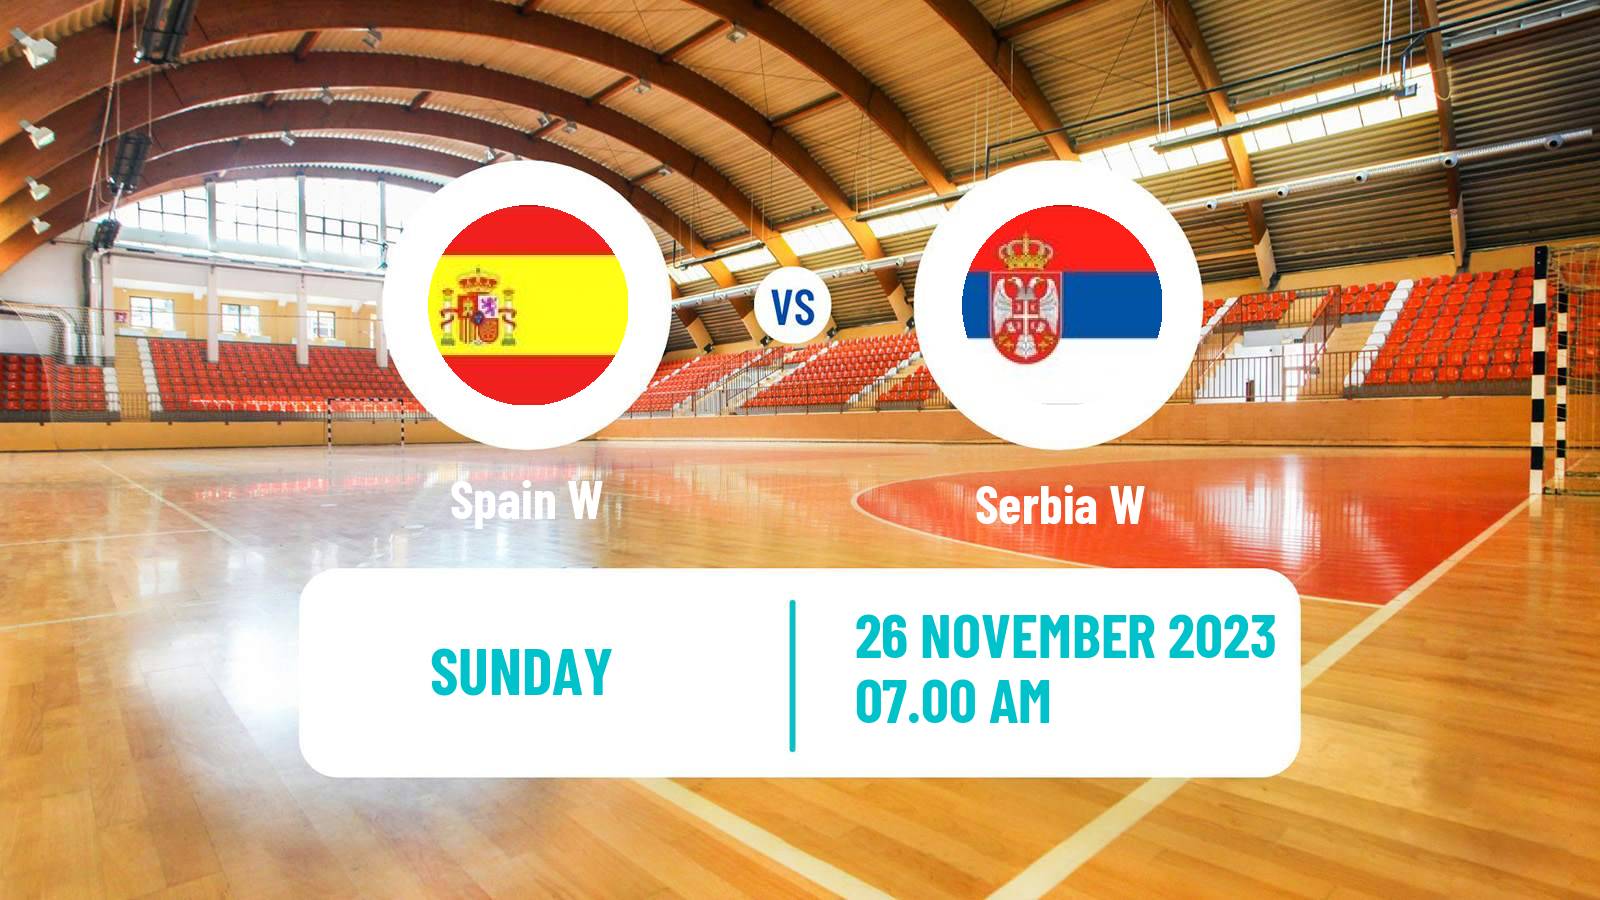 Handball Friendly International Handball Women Spain W - Serbia W